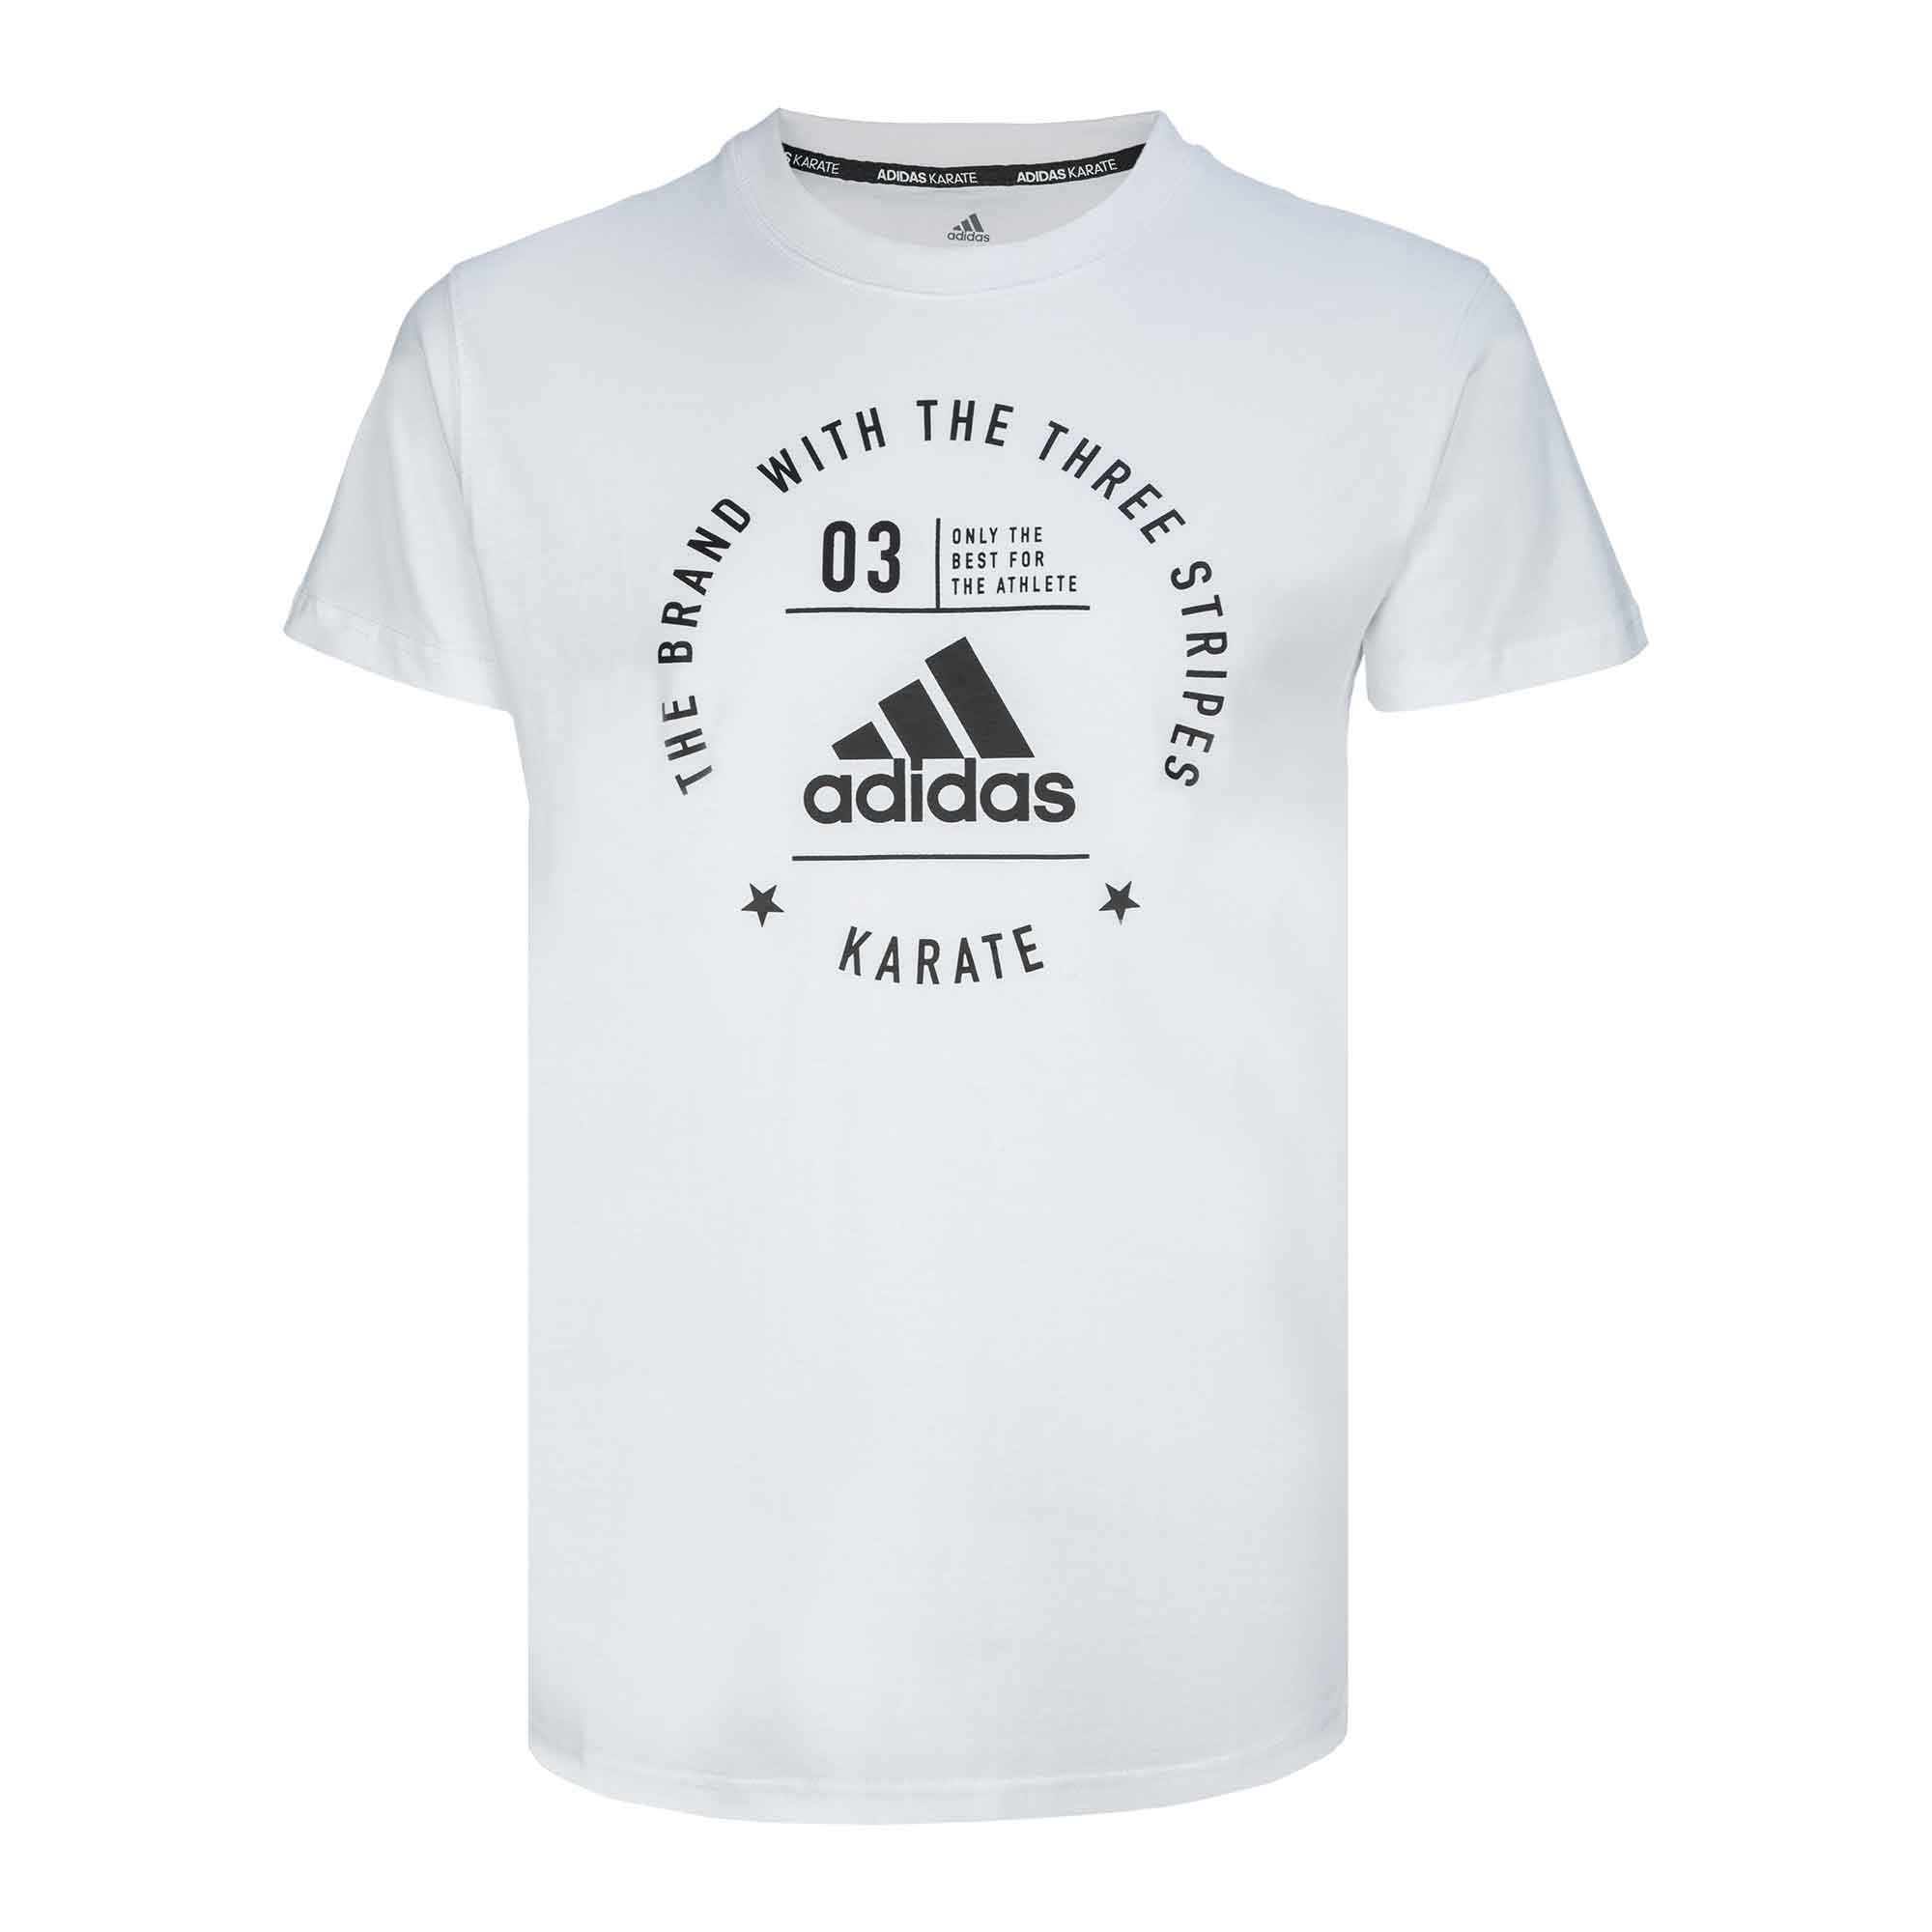 Футболка детская The Brand With The Three Stripes T-Shirt Karate Kids бело-черная